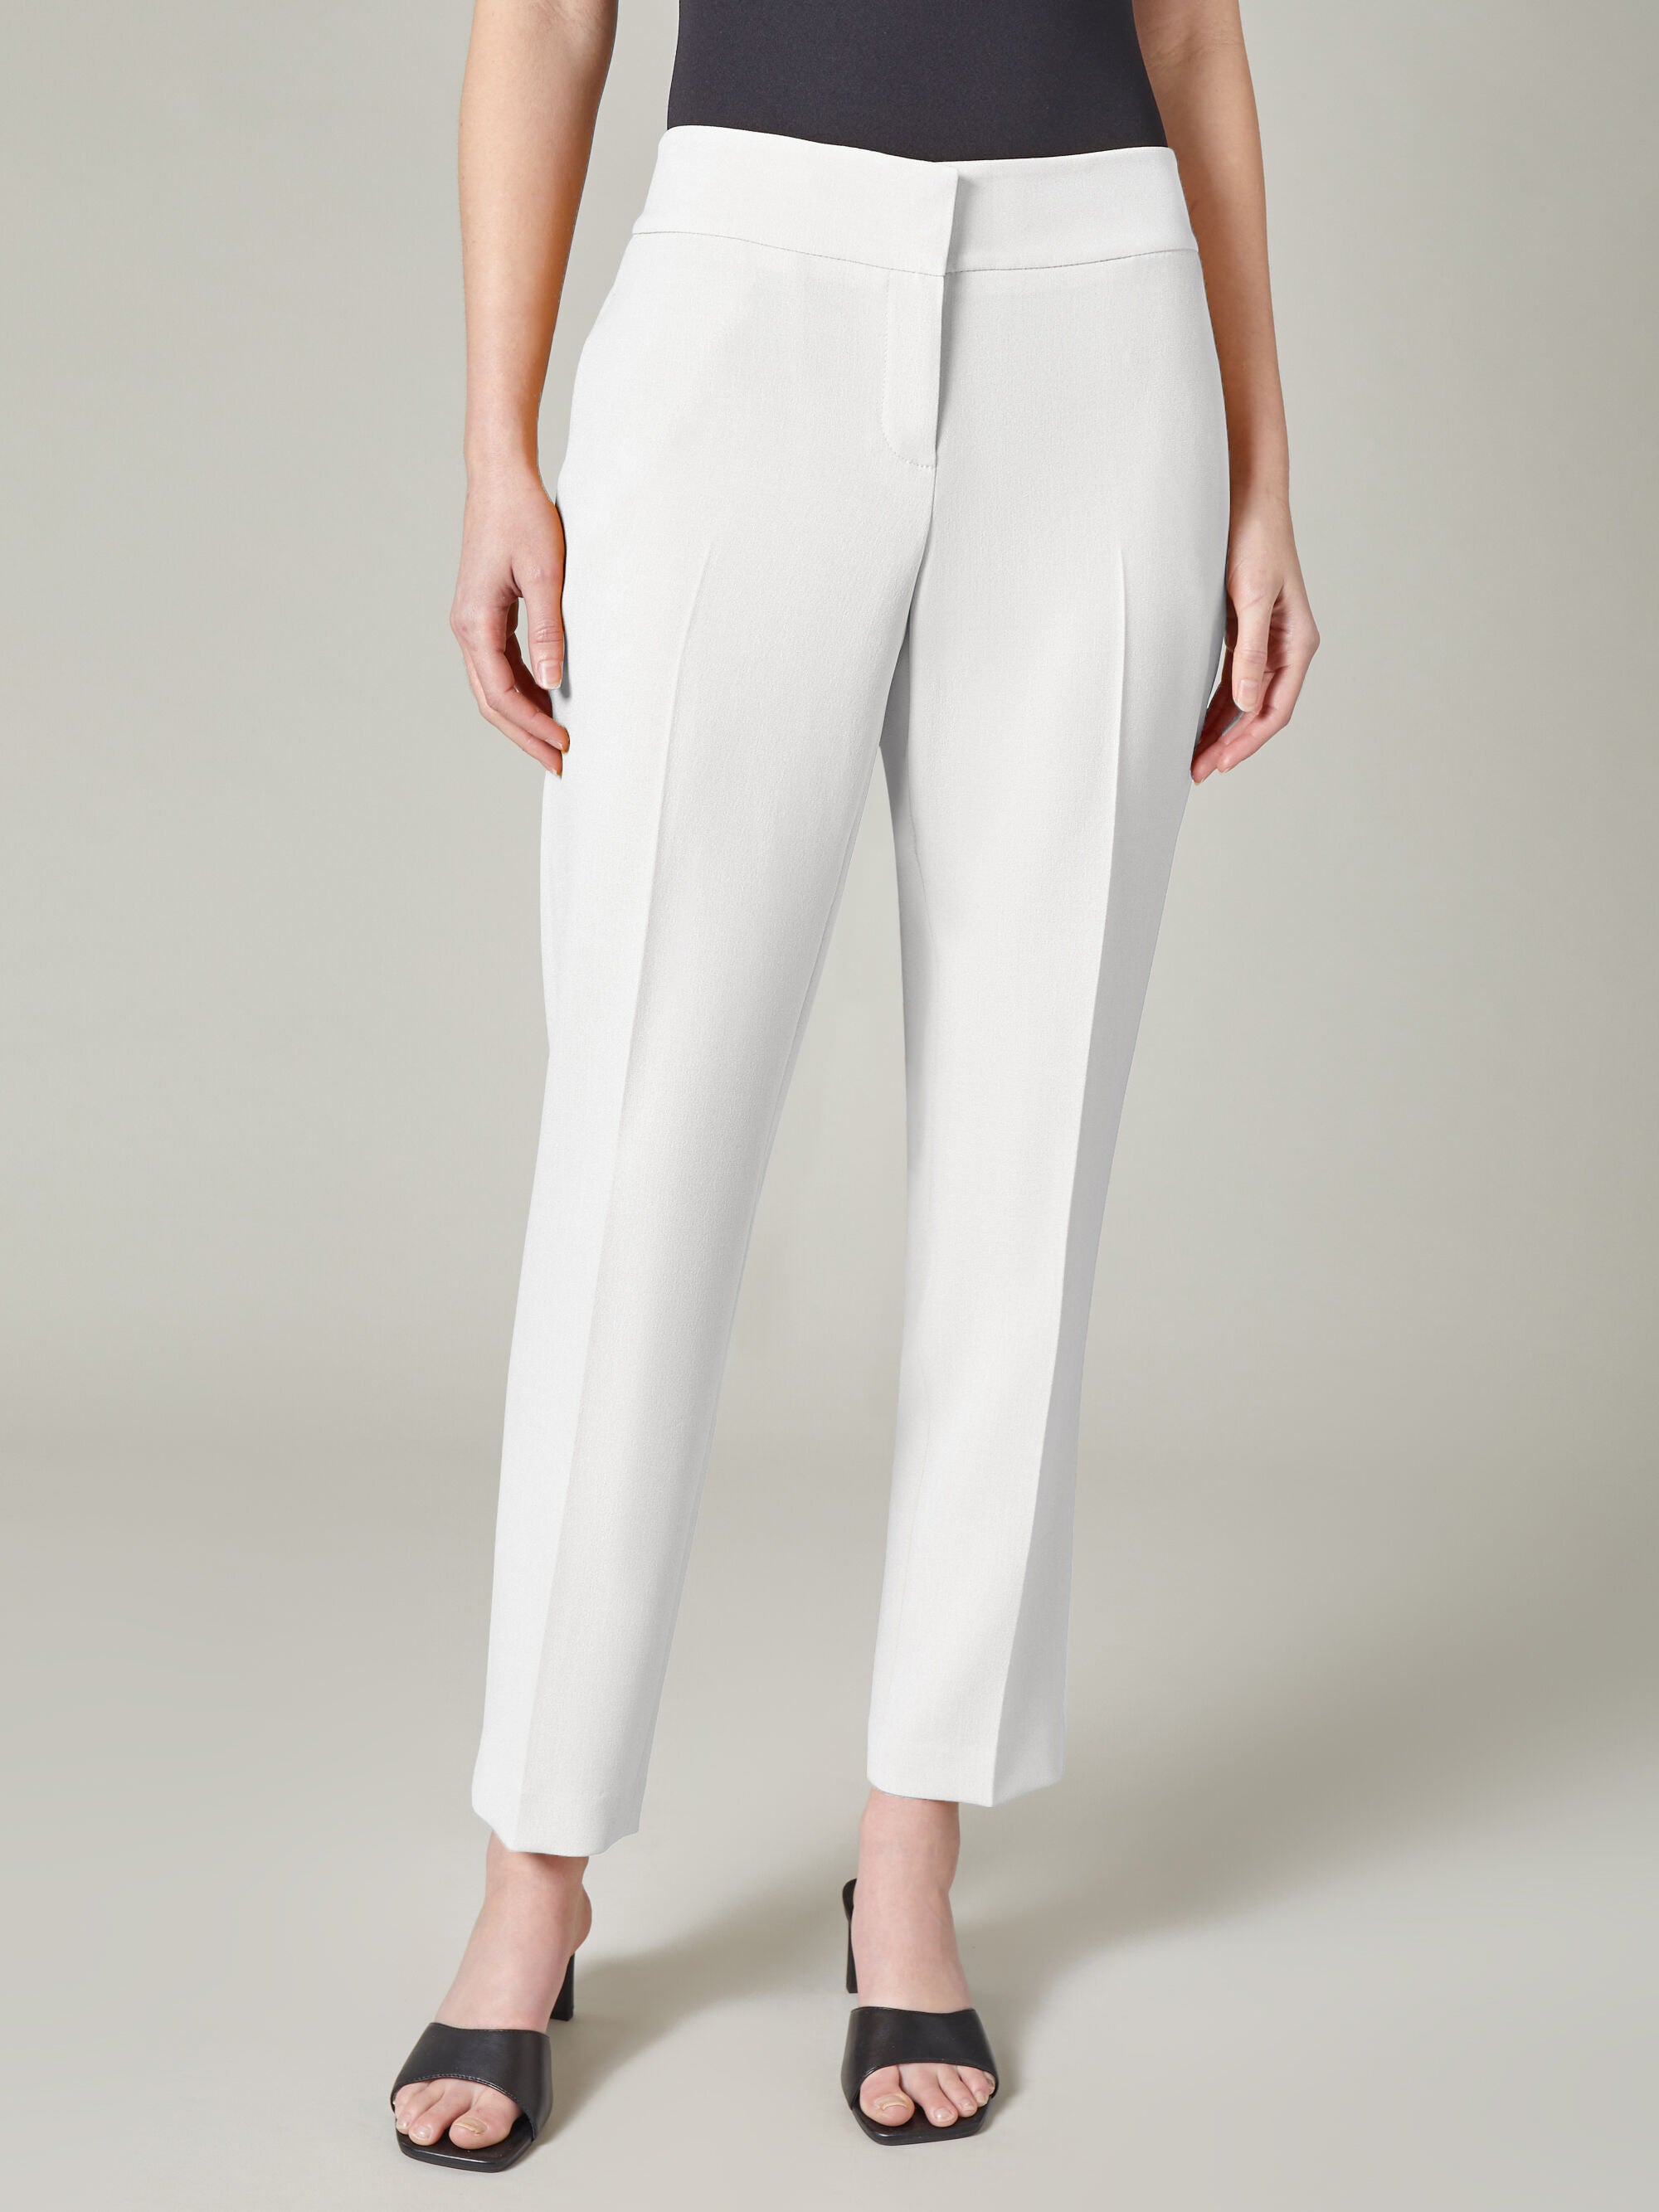 White Trousers for Women, Shop modern pants